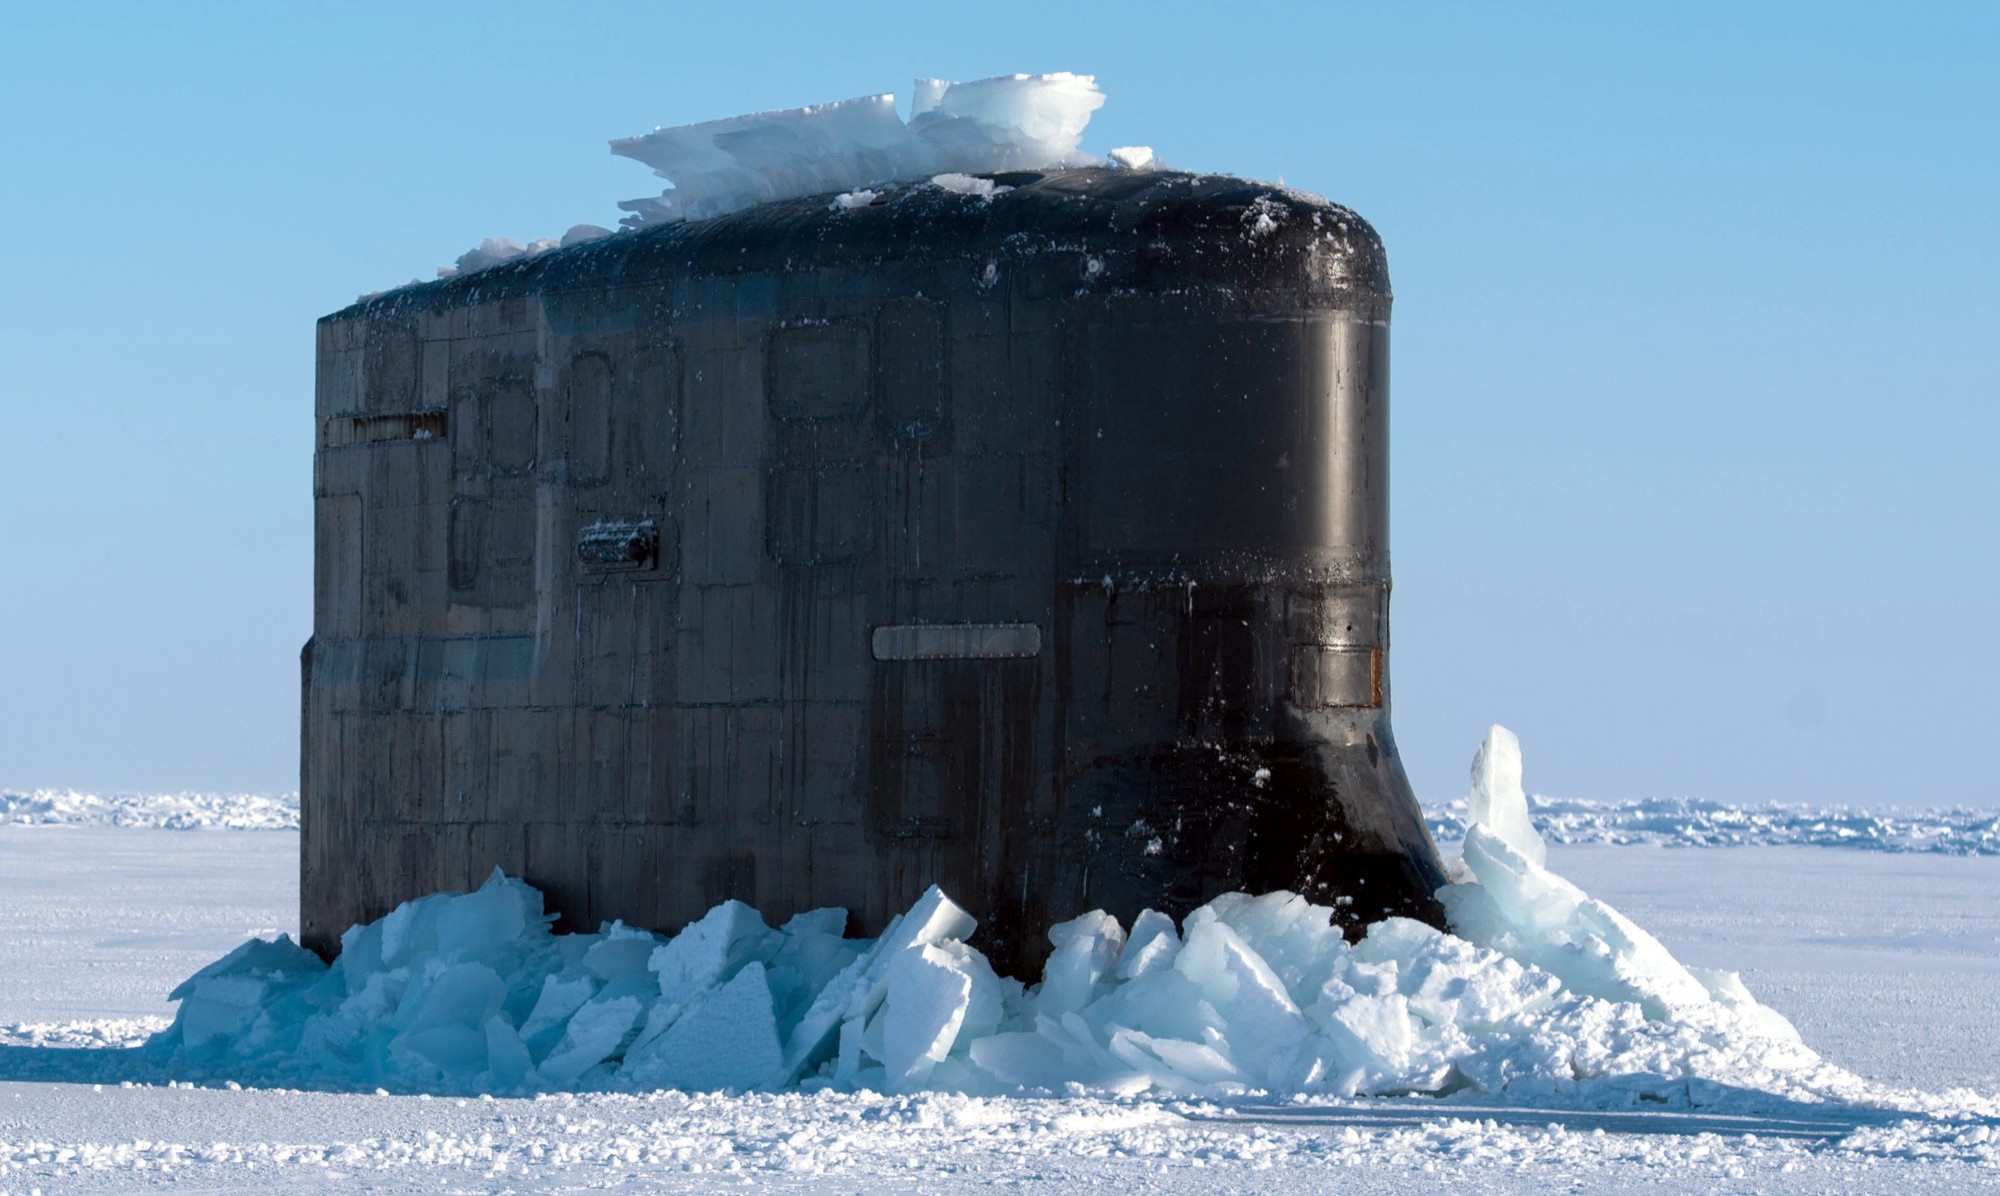 ssn-22 uss connecticut seawolf class attack submarine us navy exercise icex 18 arctic ocean 37 beaufort sea